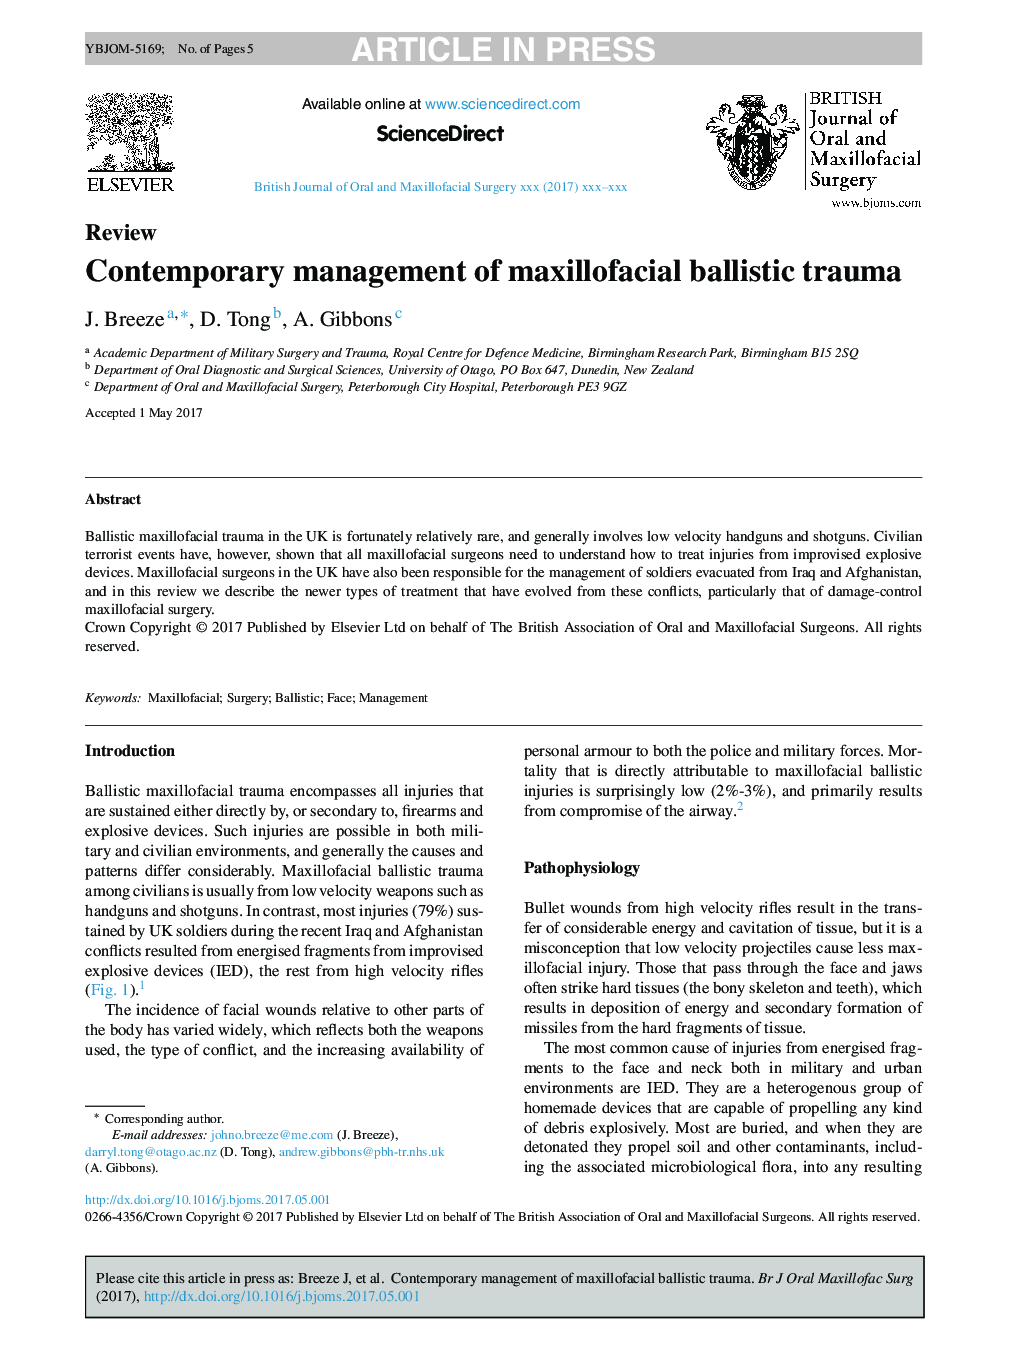 Contemporary management of maxillofacial ballistic trauma